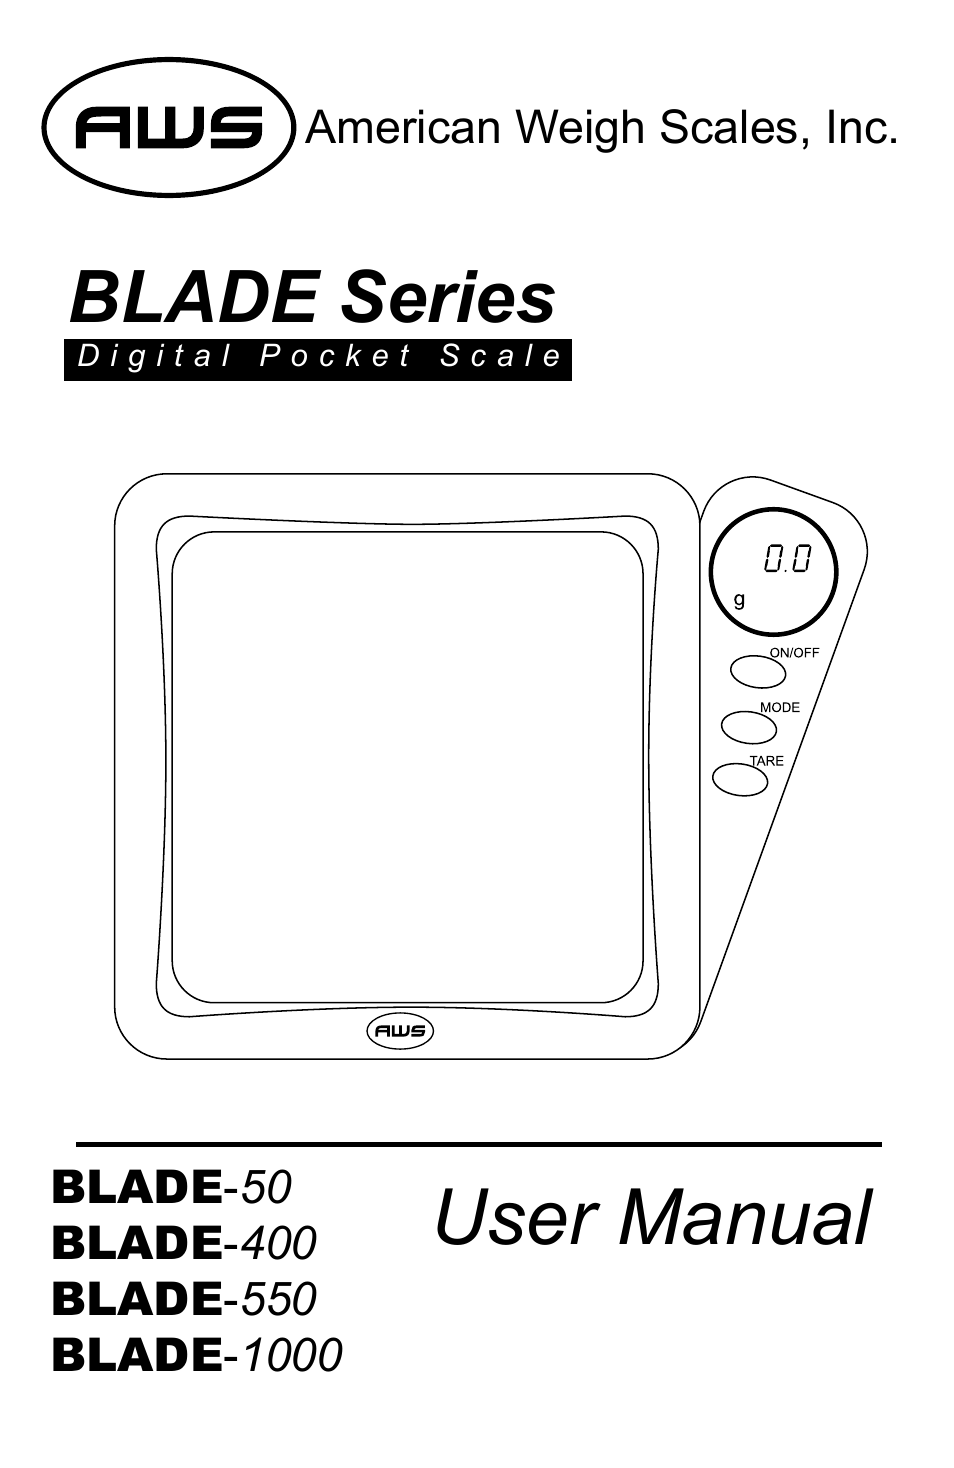 Blade-550